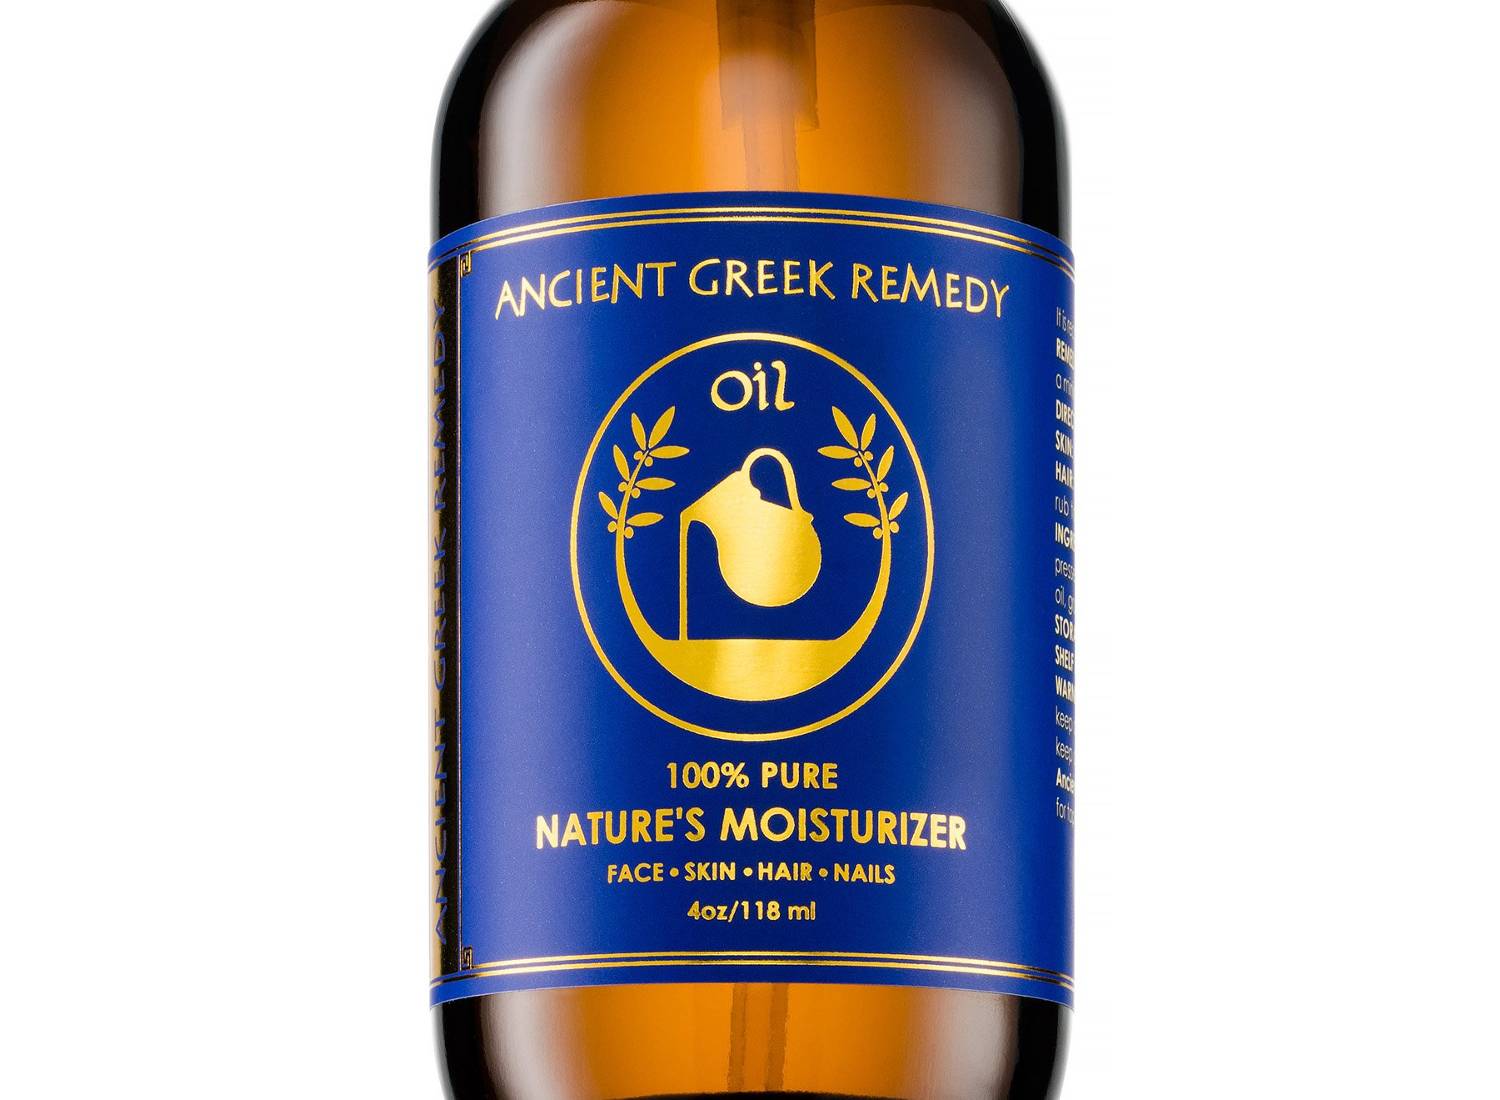 Bottle of Ancient Greek Remedy's Moisturizing Oil